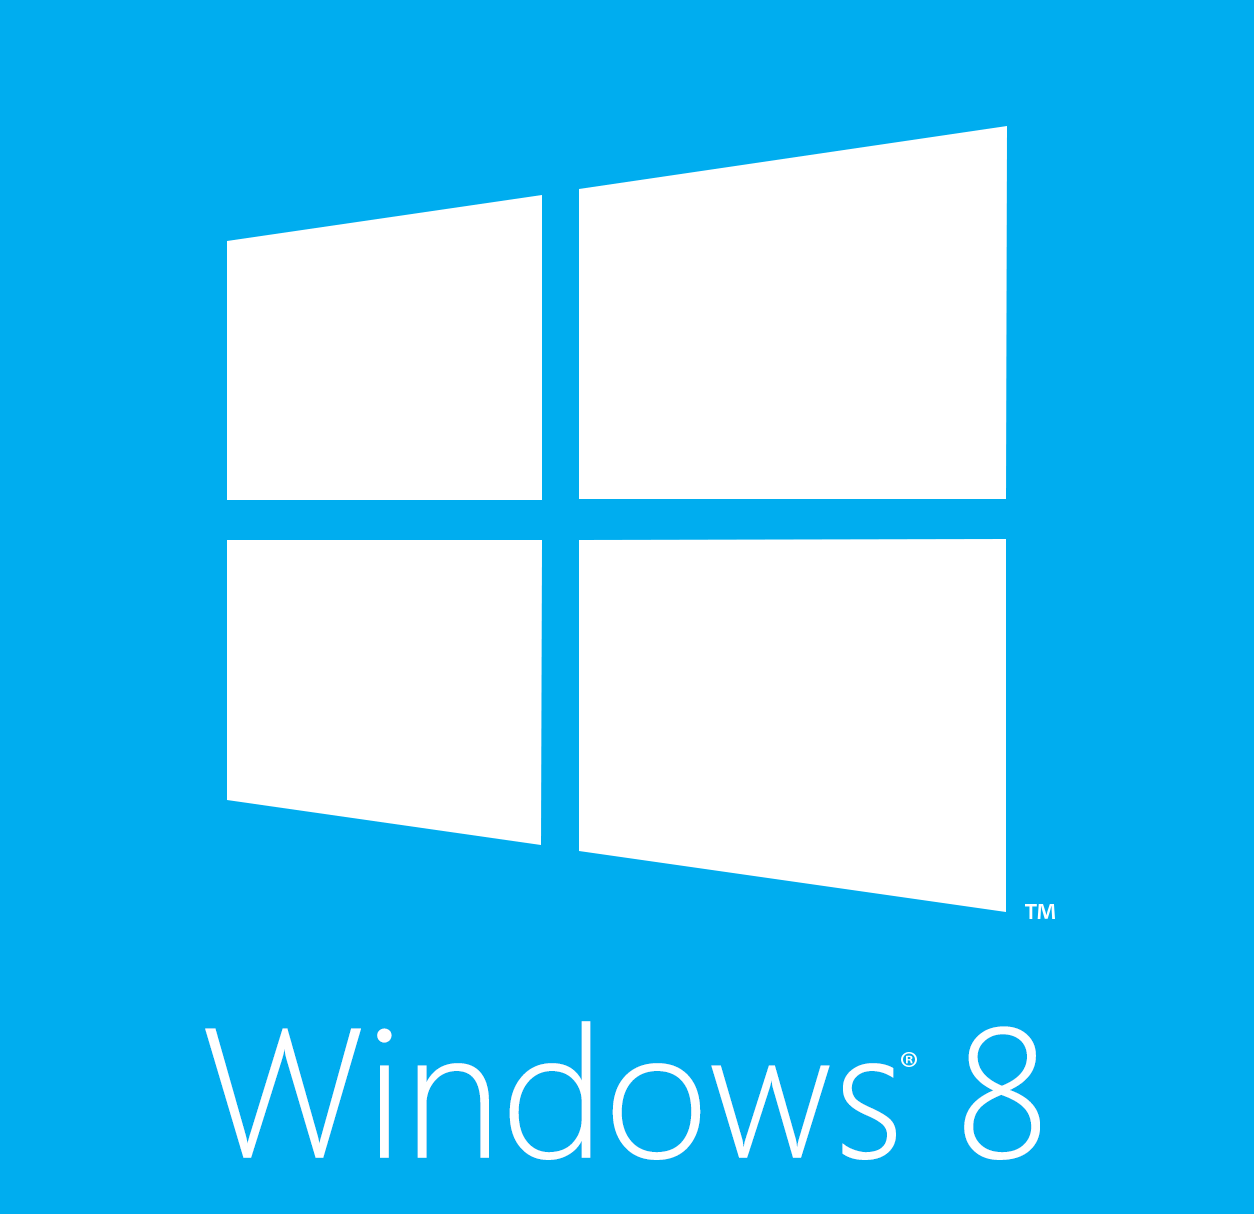 Microsoft Windows 8 Logo - Windows 8 Logos